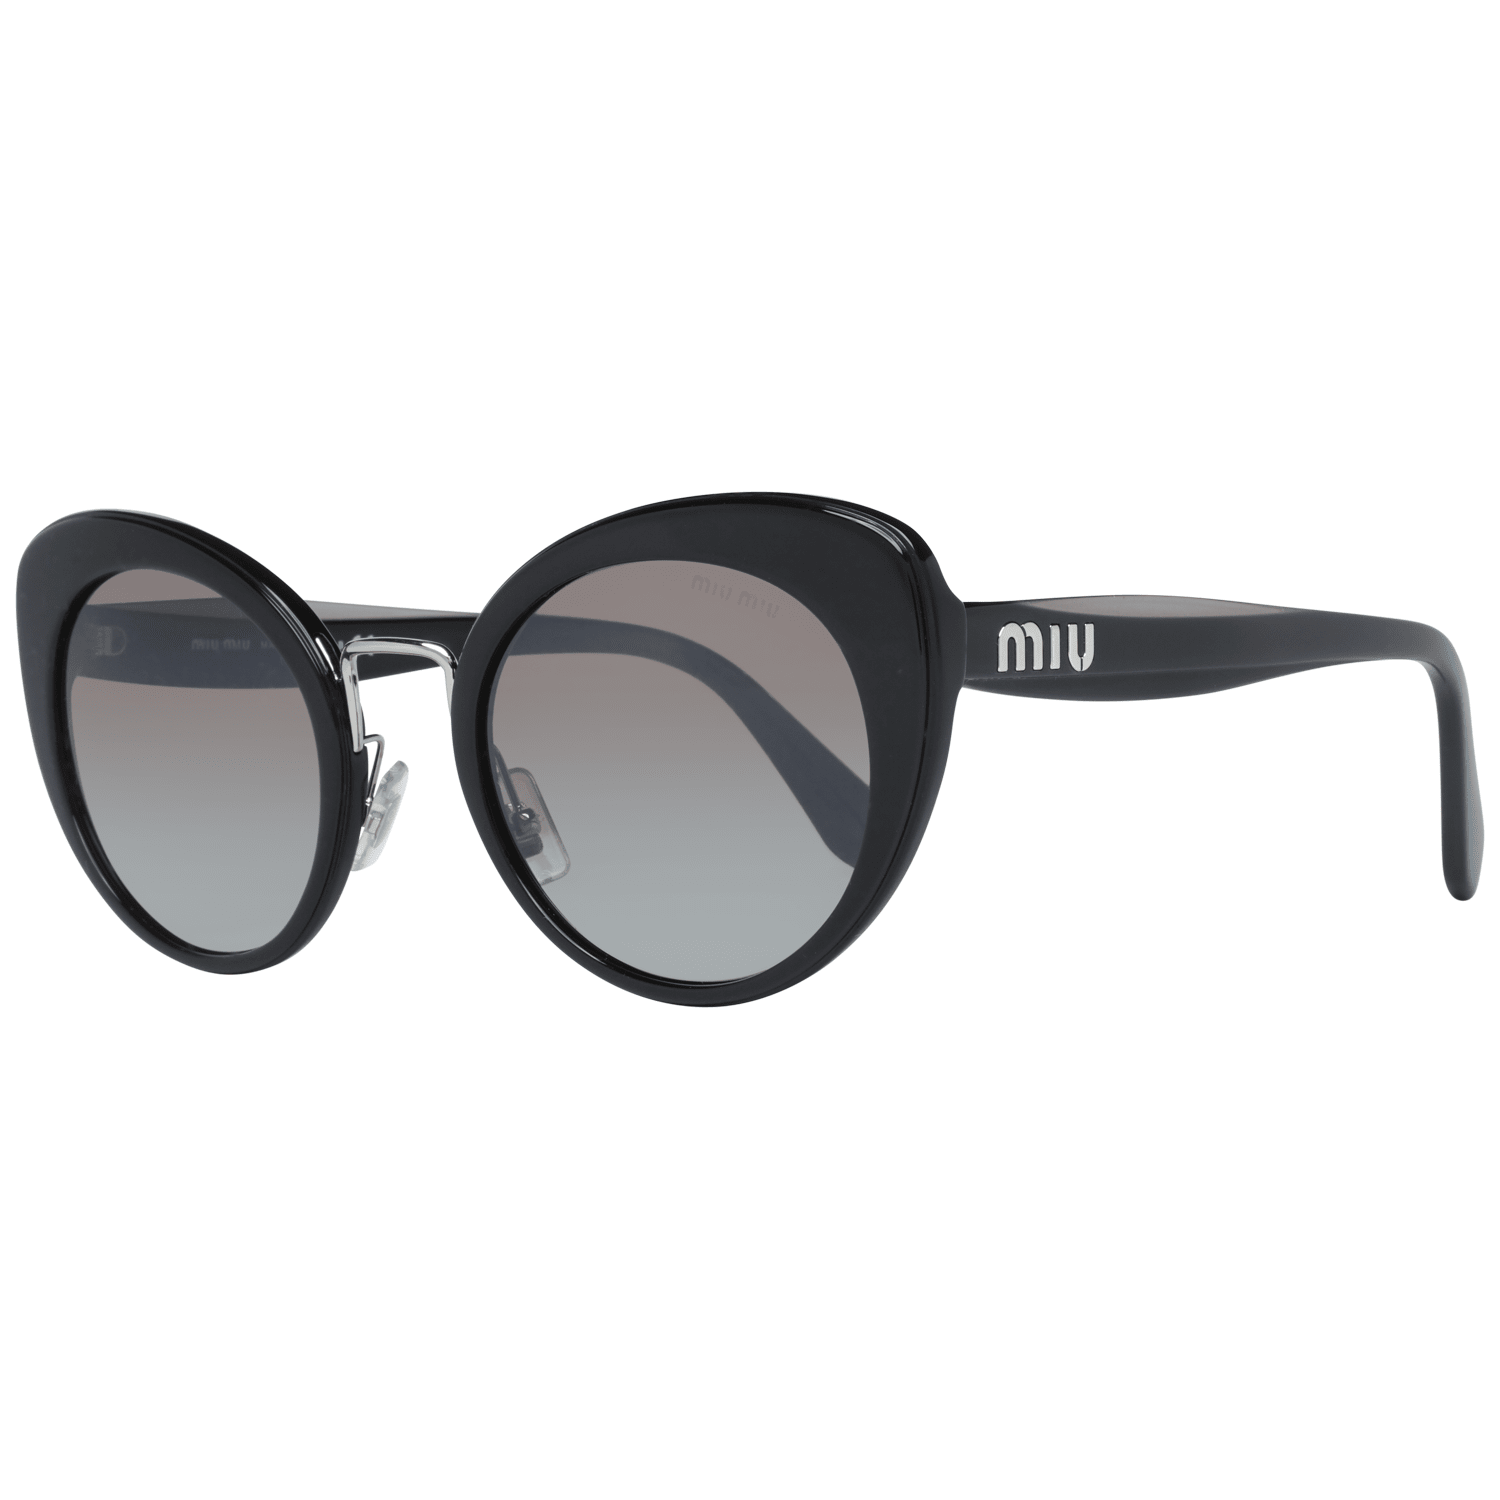 Miu Miu Women's Sunglasses Black MU06TS 16E5O053